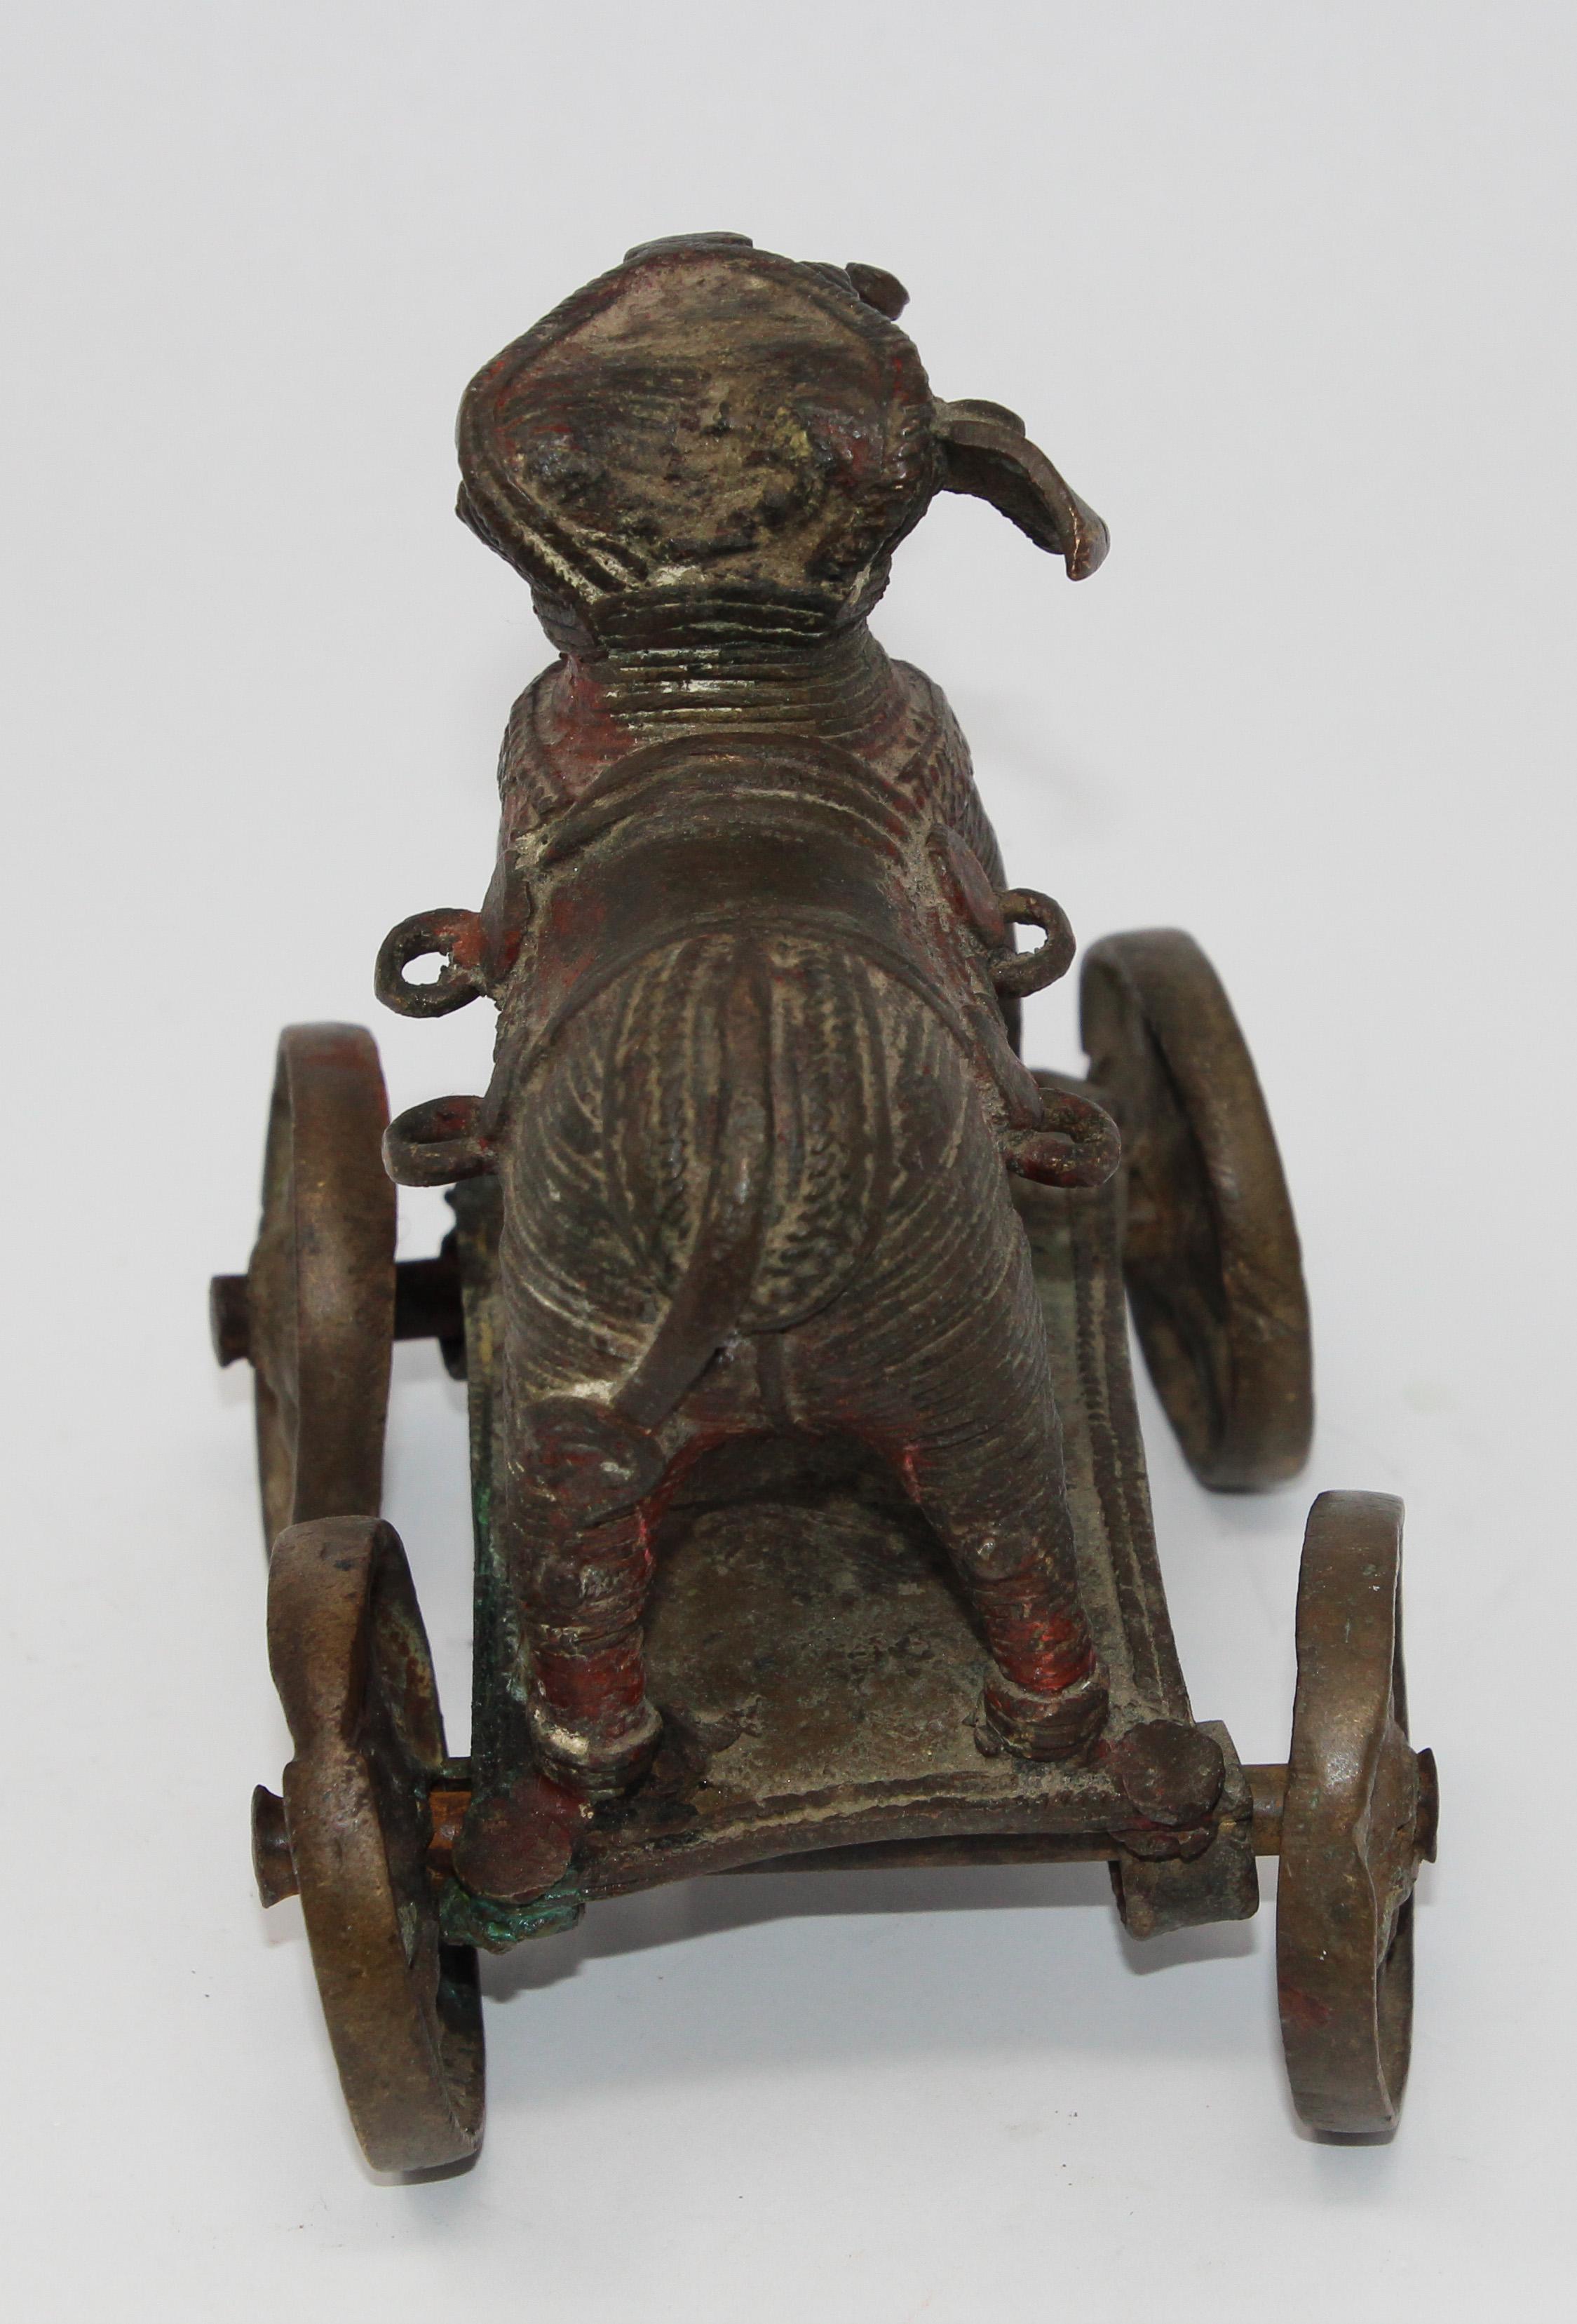 Antique Elephant Toy Cast Bronze on Wheels, India 3